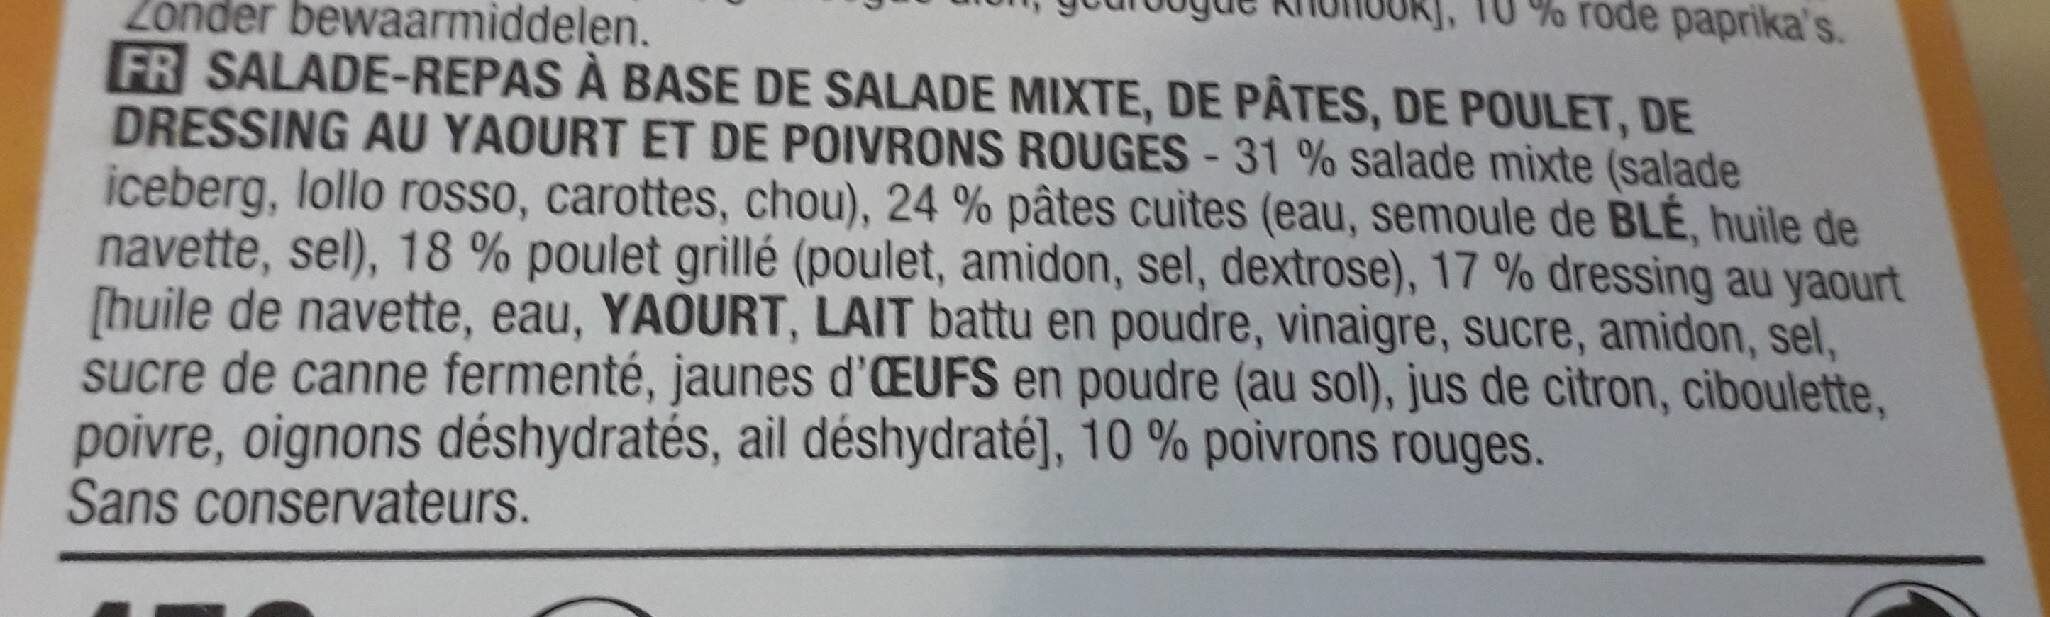 Salade au poulet - Ingredients - fr